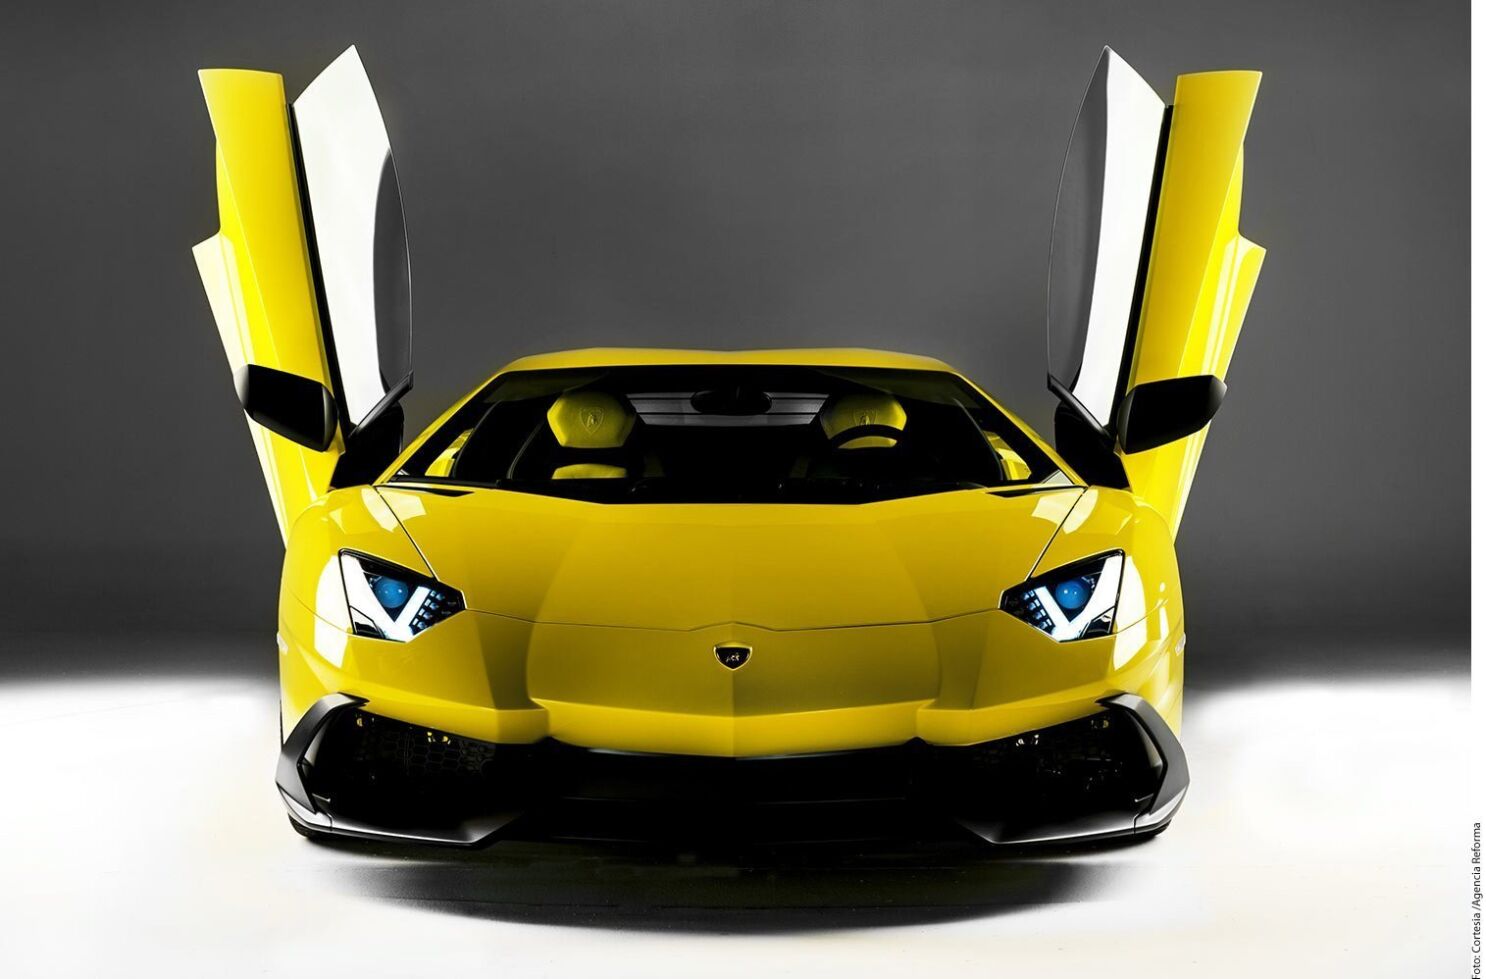 Lamborghini: 50 años de lujo y potencia - San Diego Union-Tribune en Español